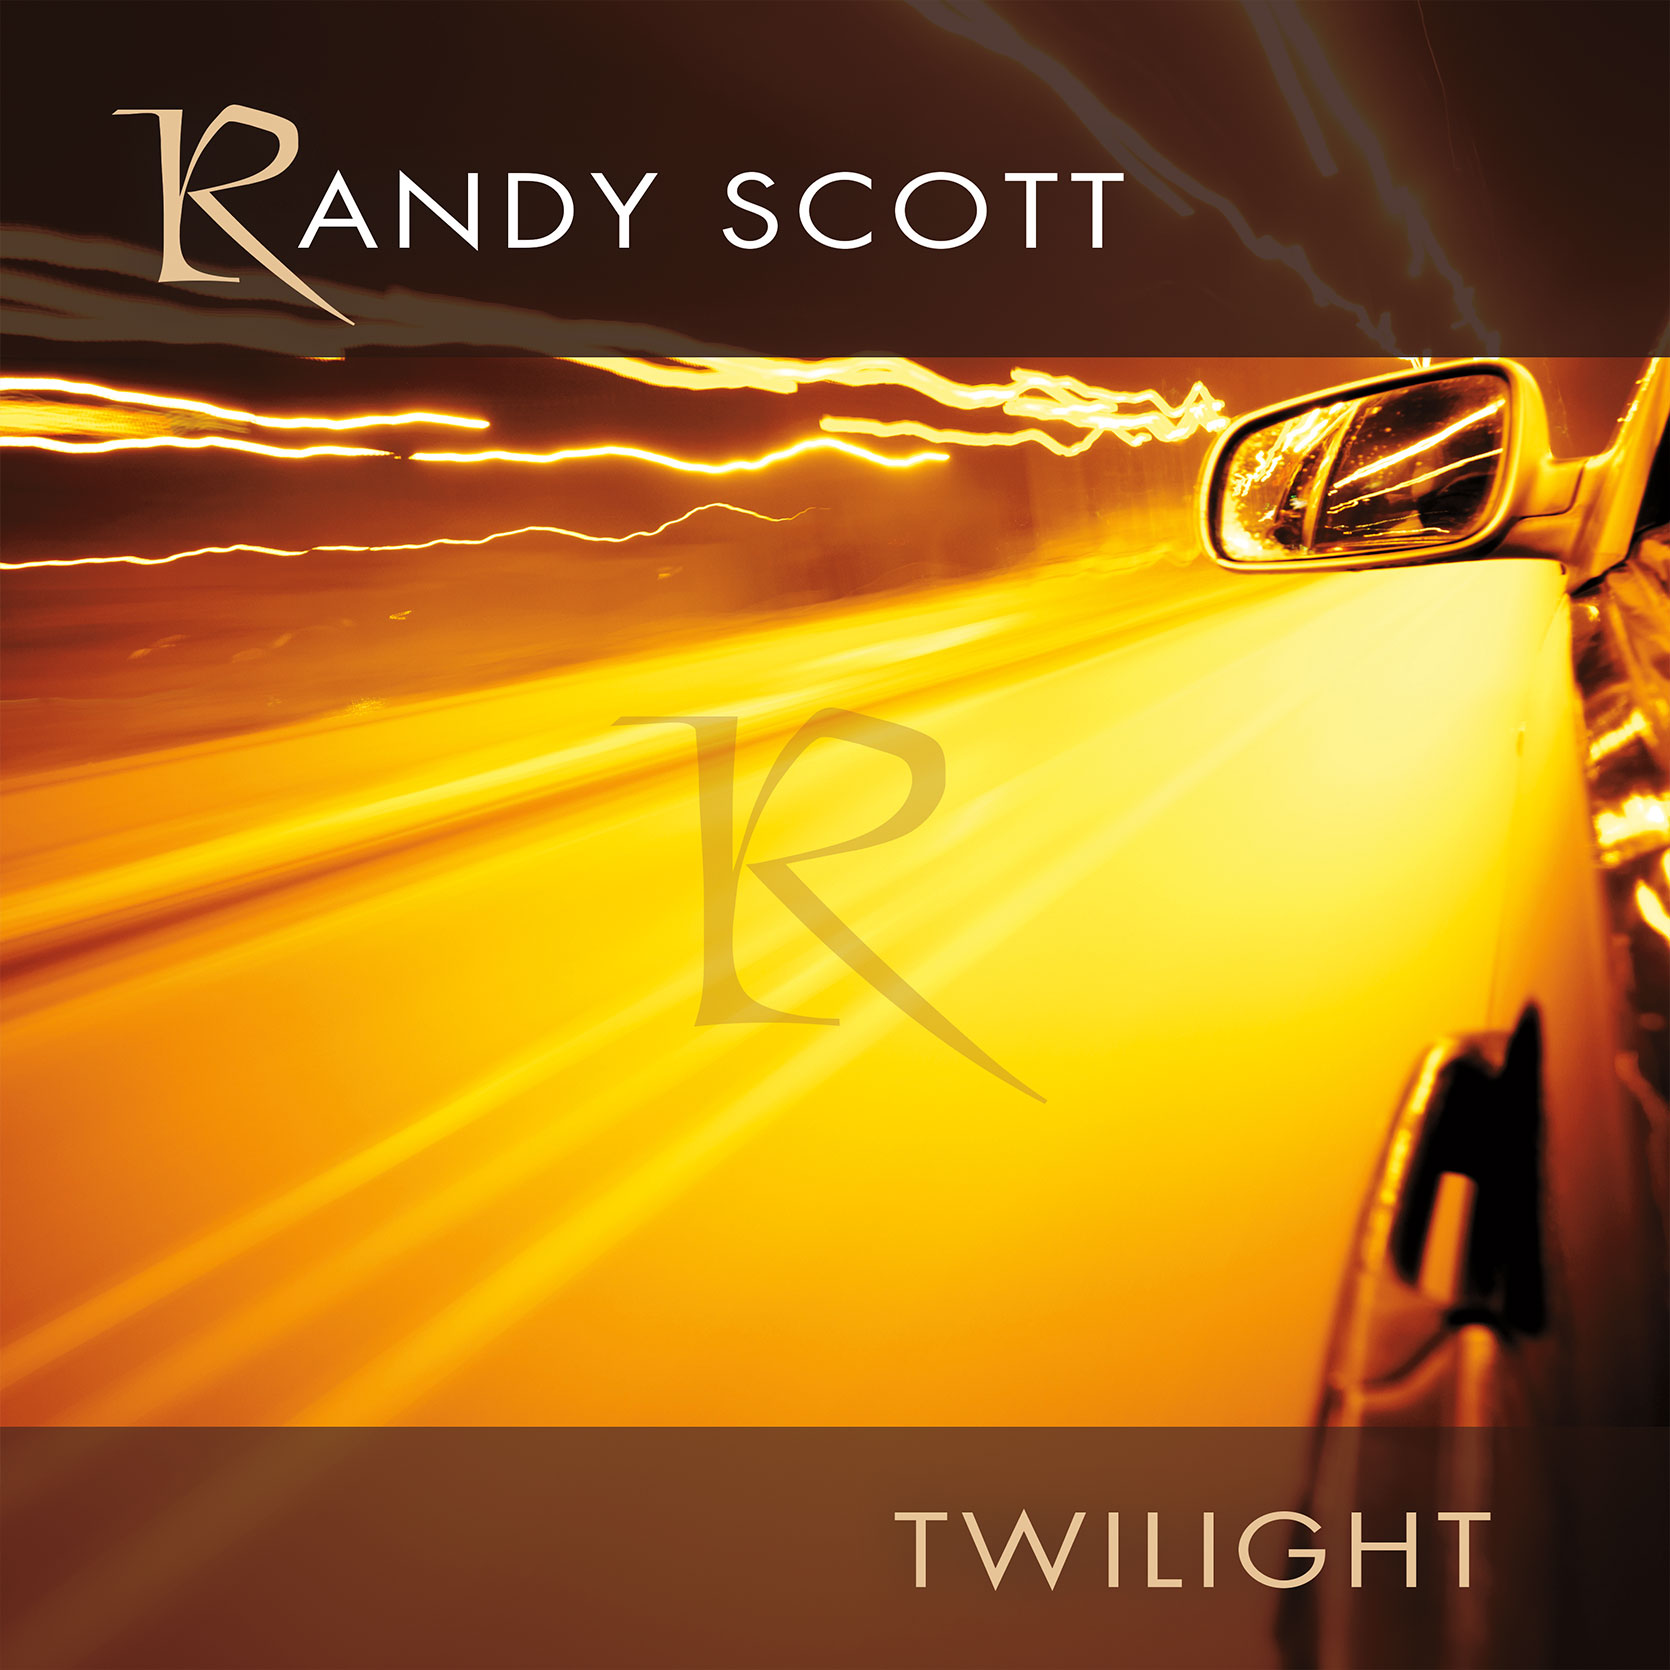 Listen to Twilight by Smooth Jazz recording artist Randy Scott